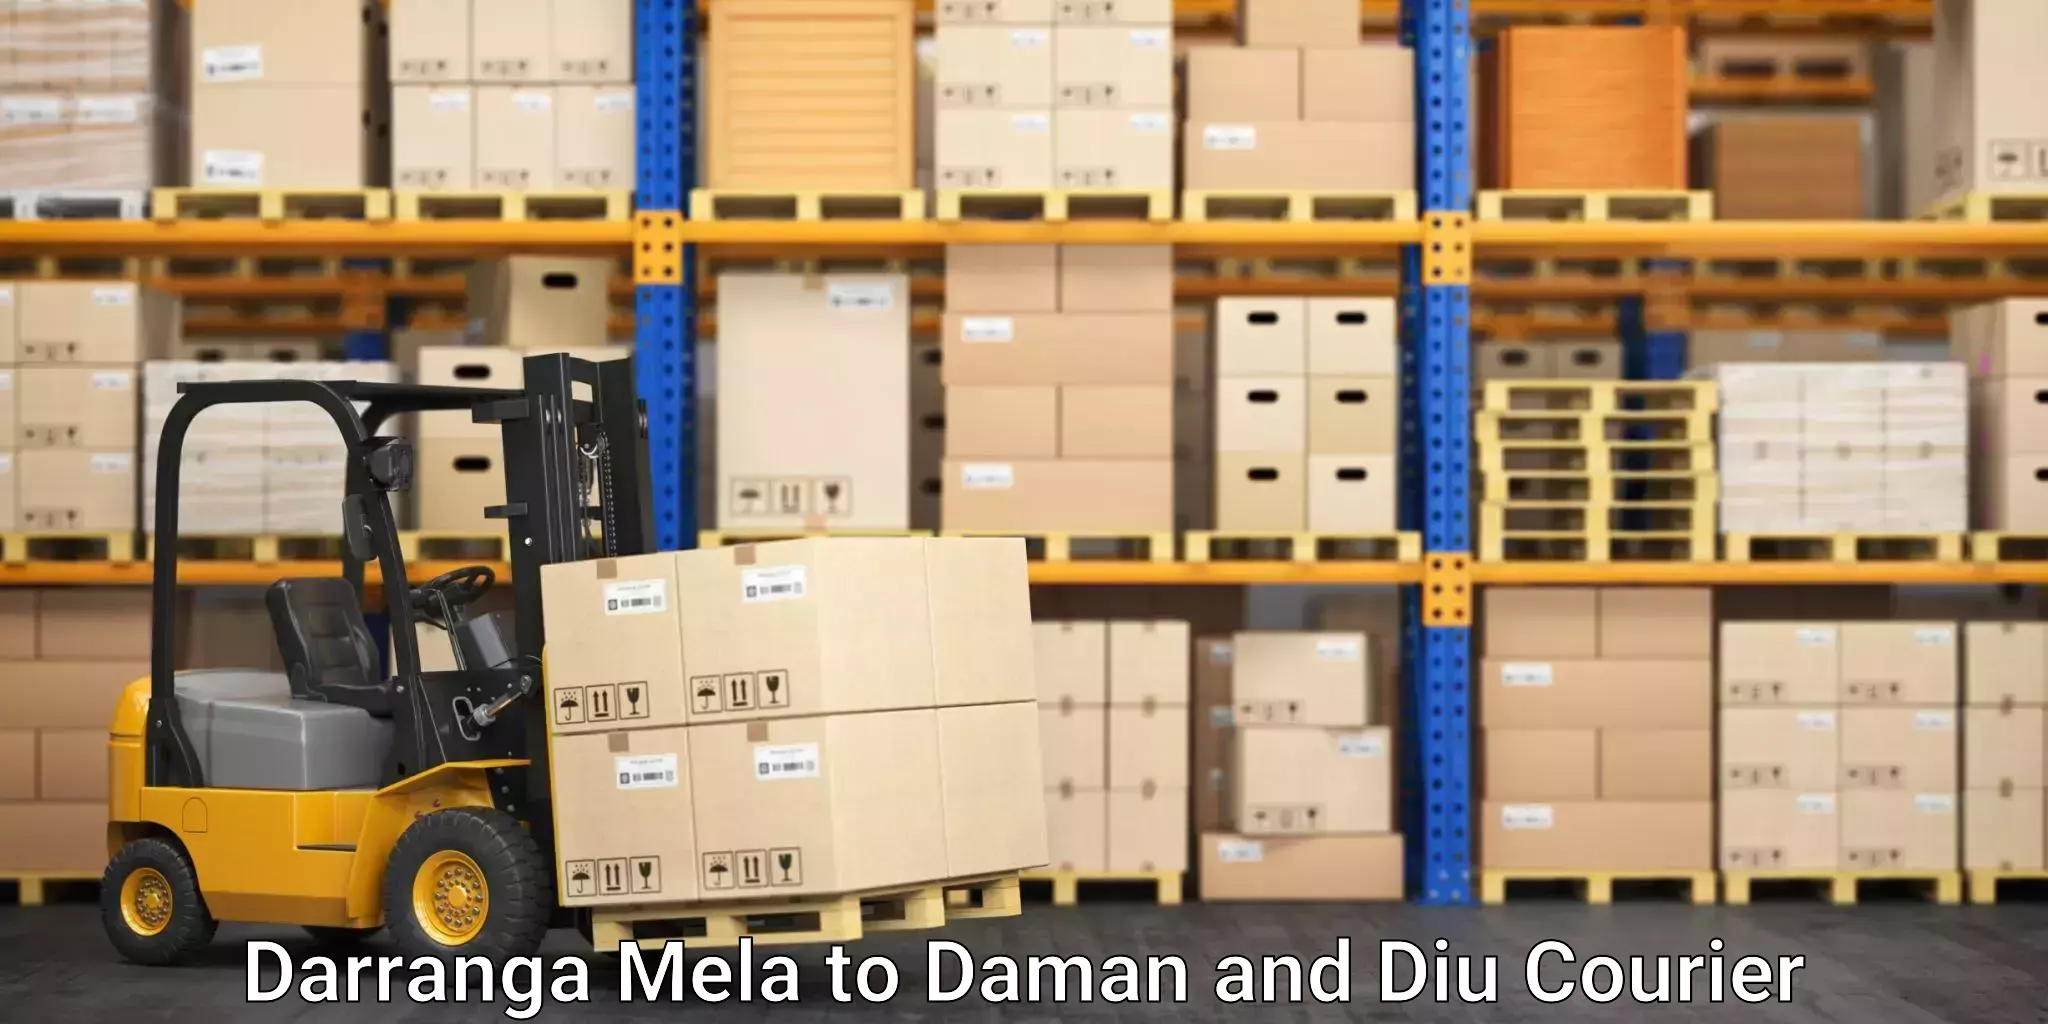 Cash on delivery service Darranga Mela to Diu